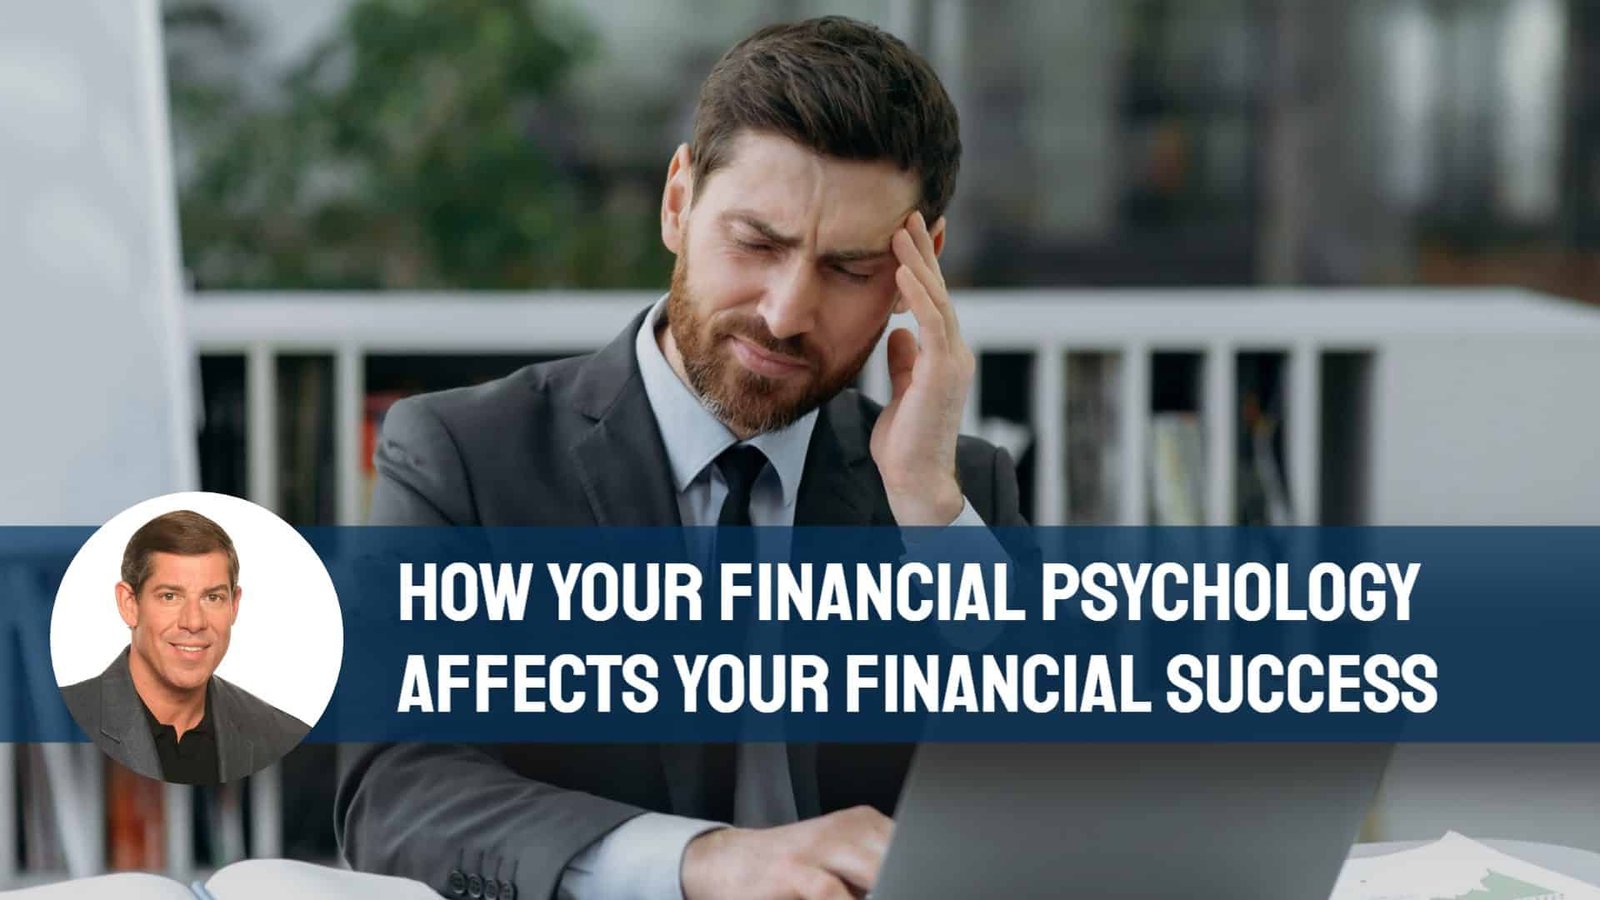 Financial Psychology